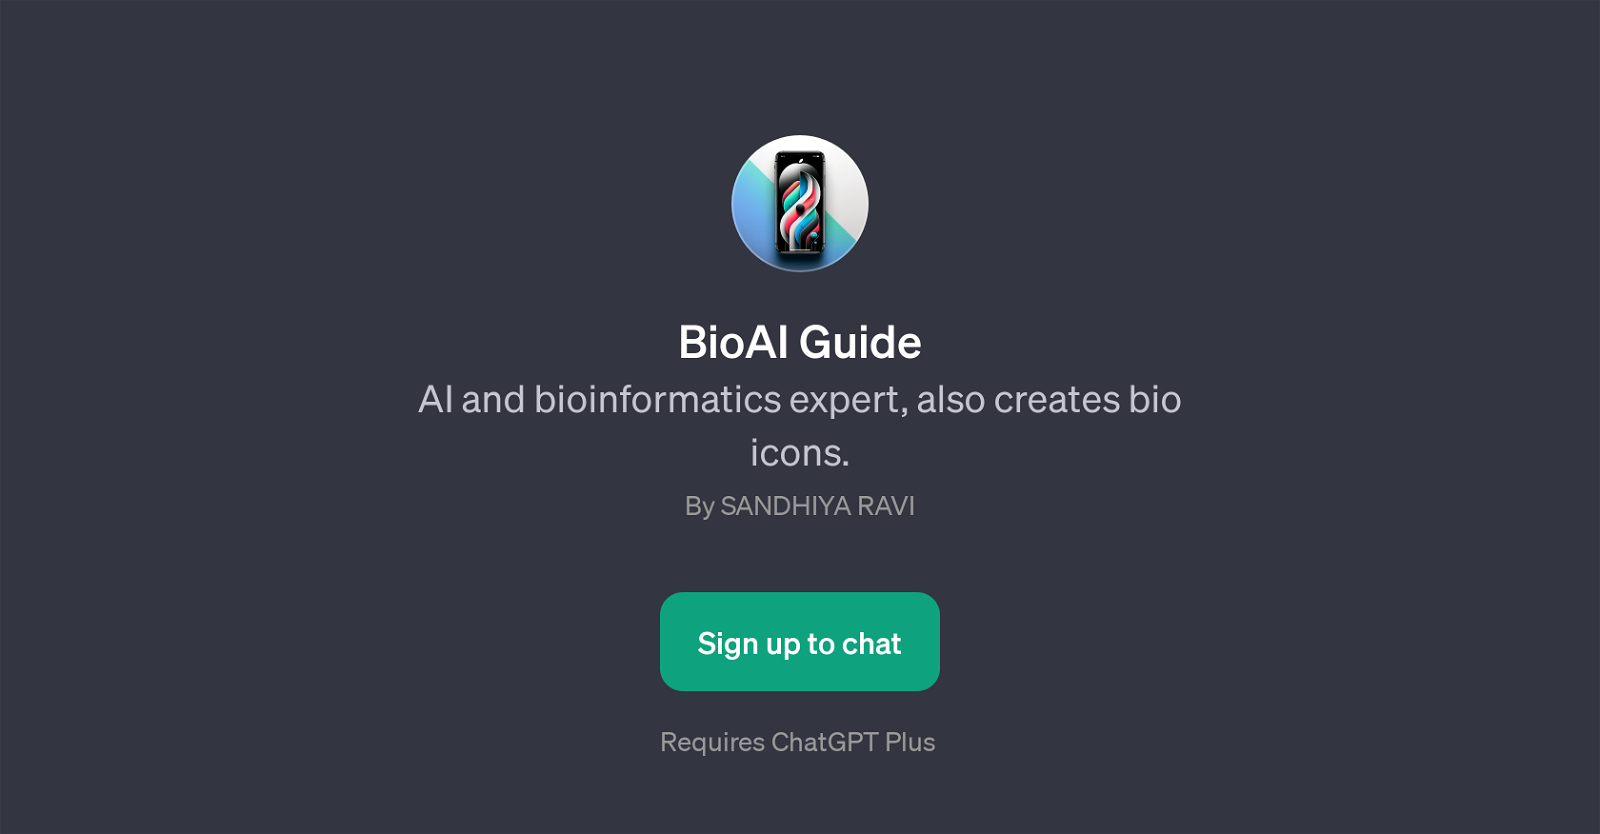 BioAI Guide website